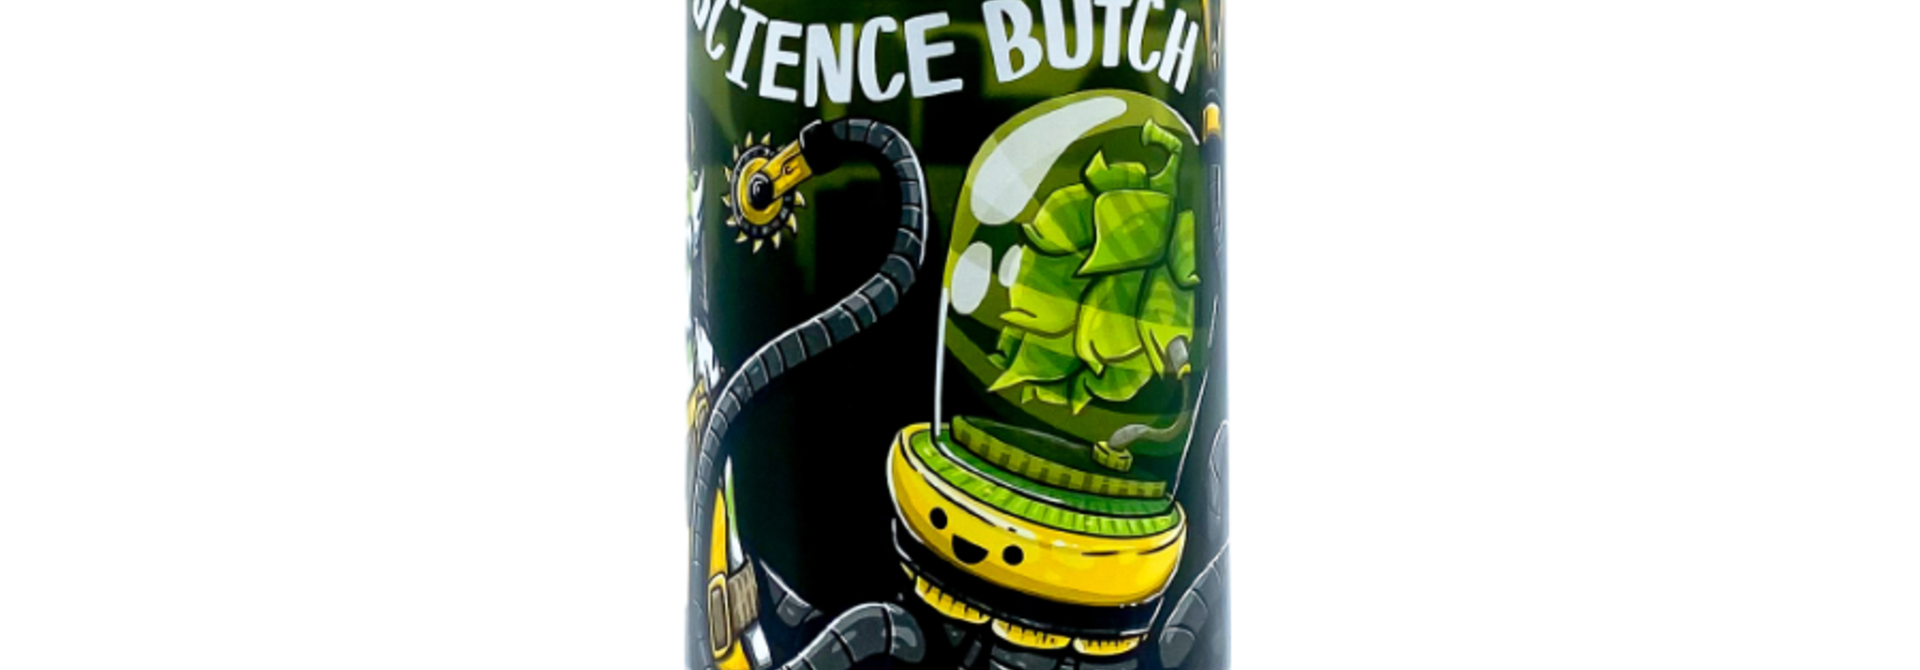 Nova Runda Science Butch 50cl 6,9%